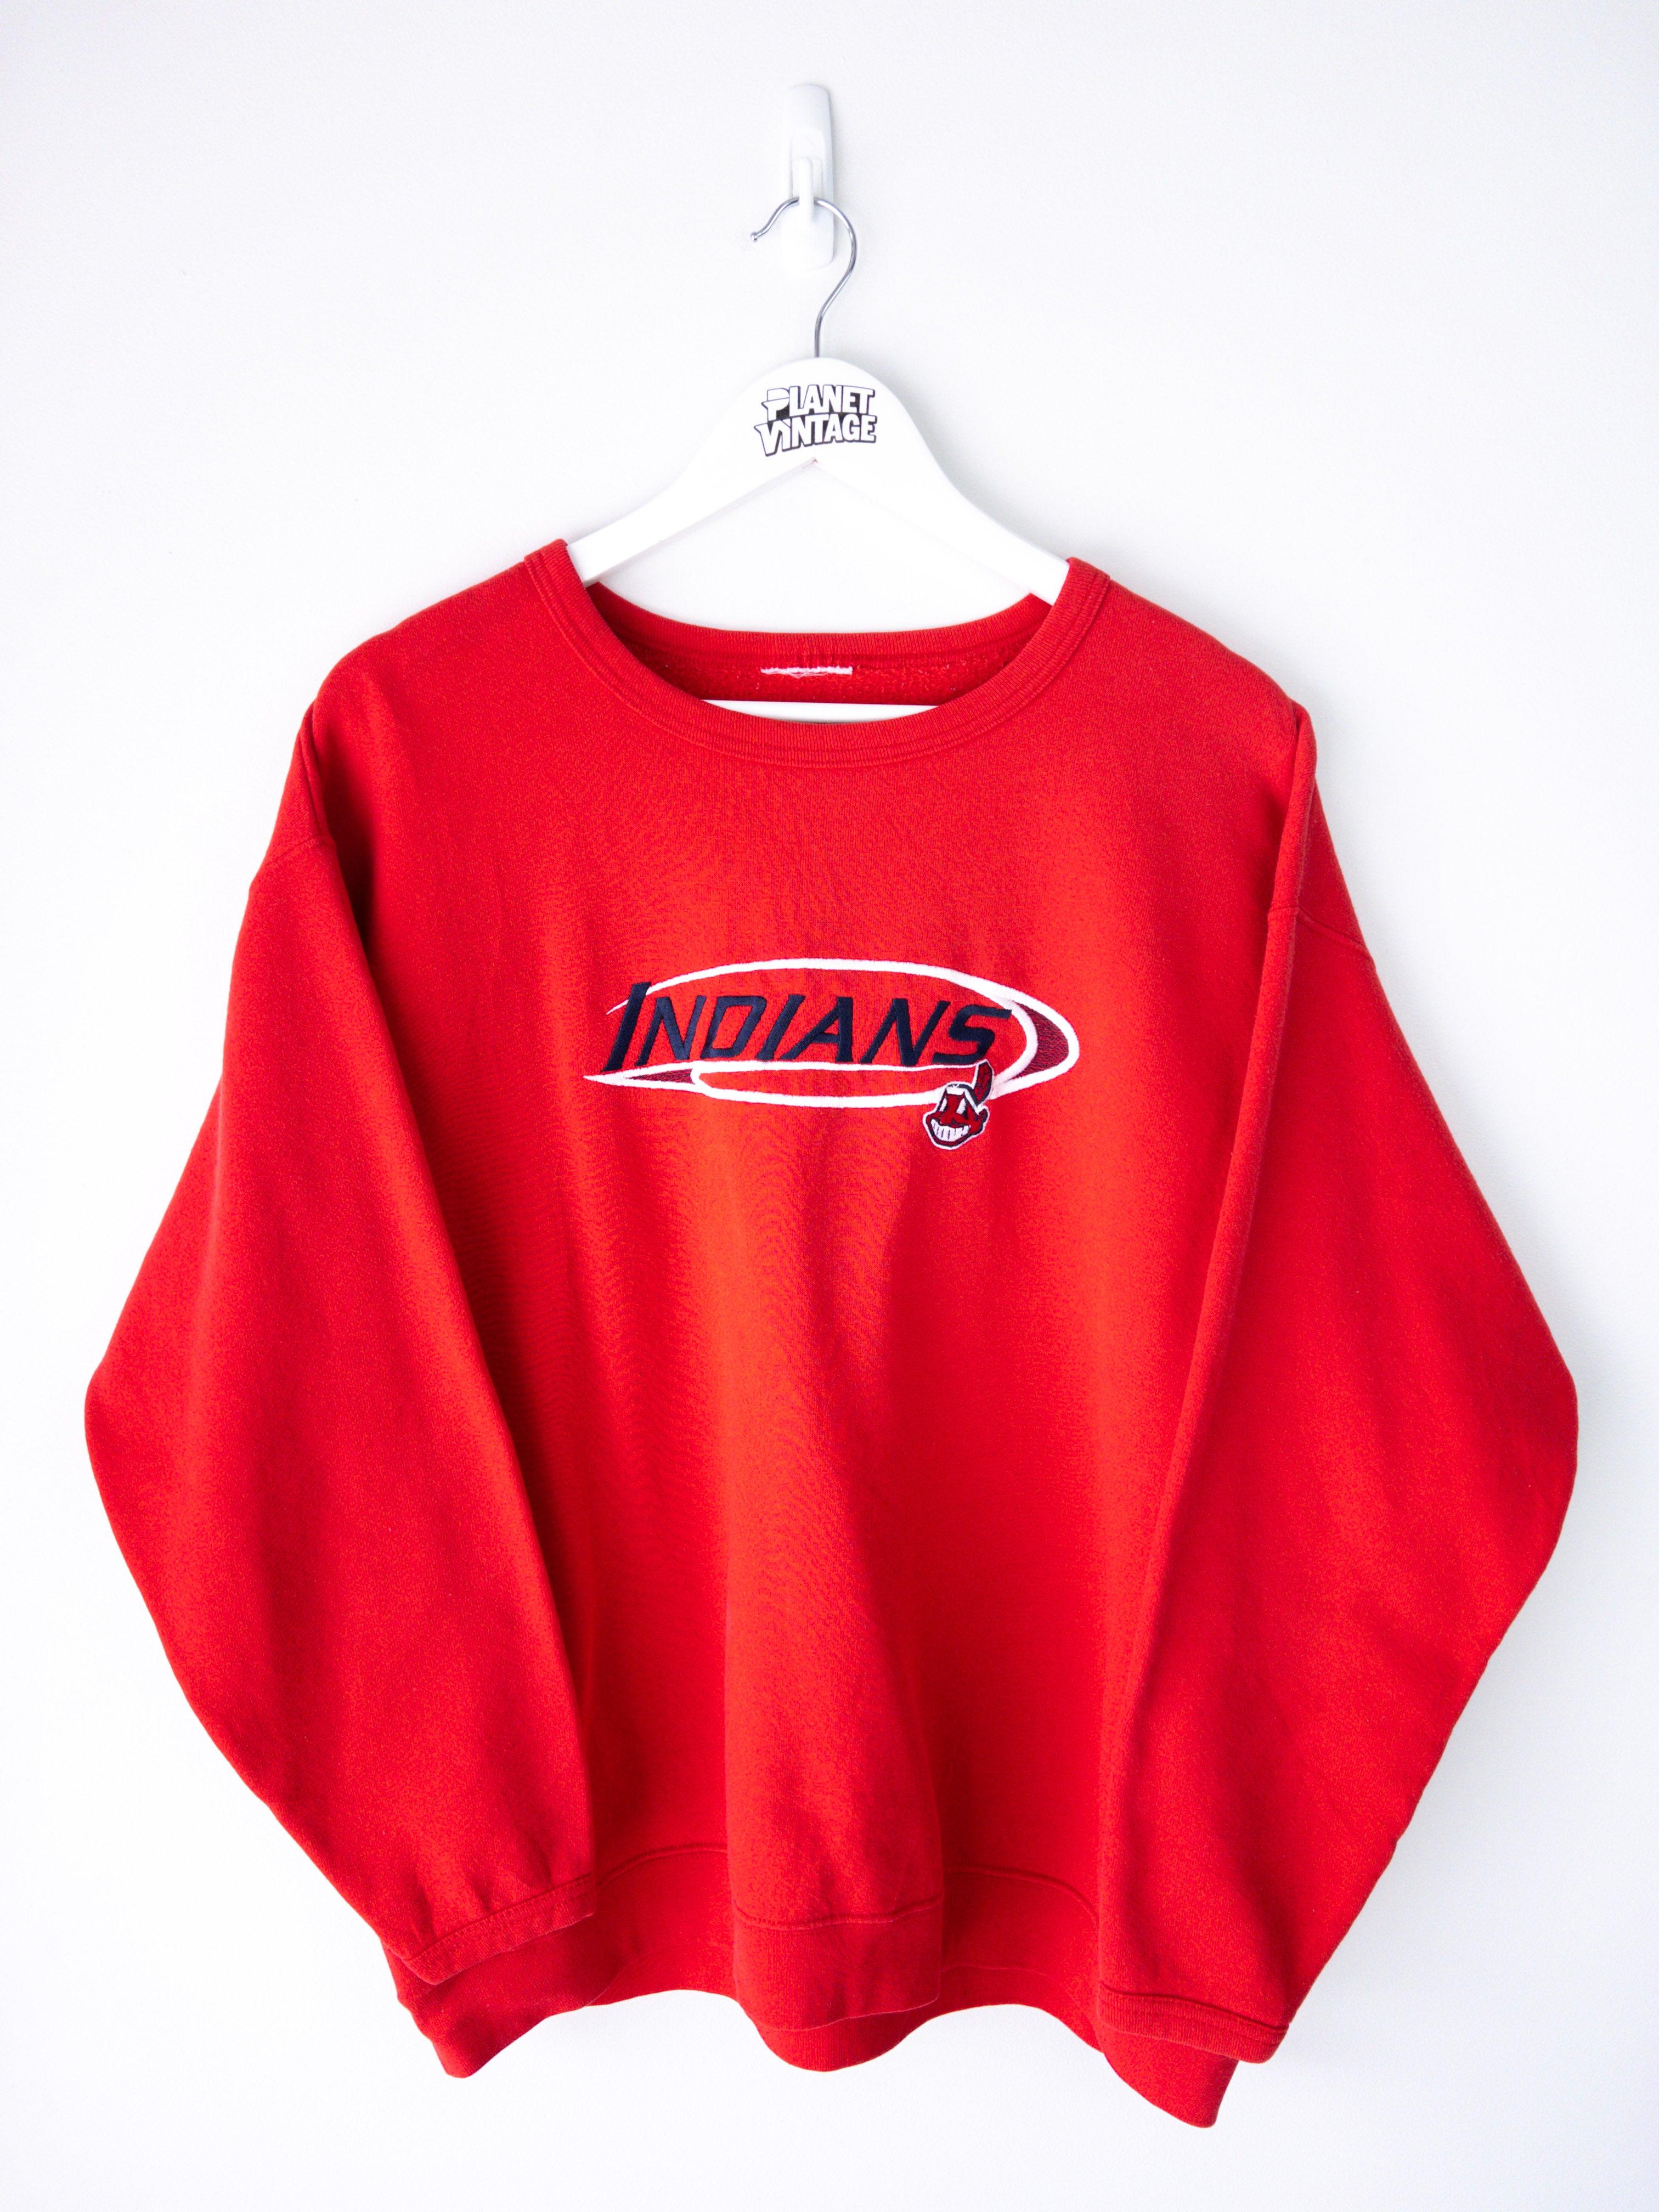 Vintage Cleveland Indians Sweatshirt (XL) - Planet Vintage Store